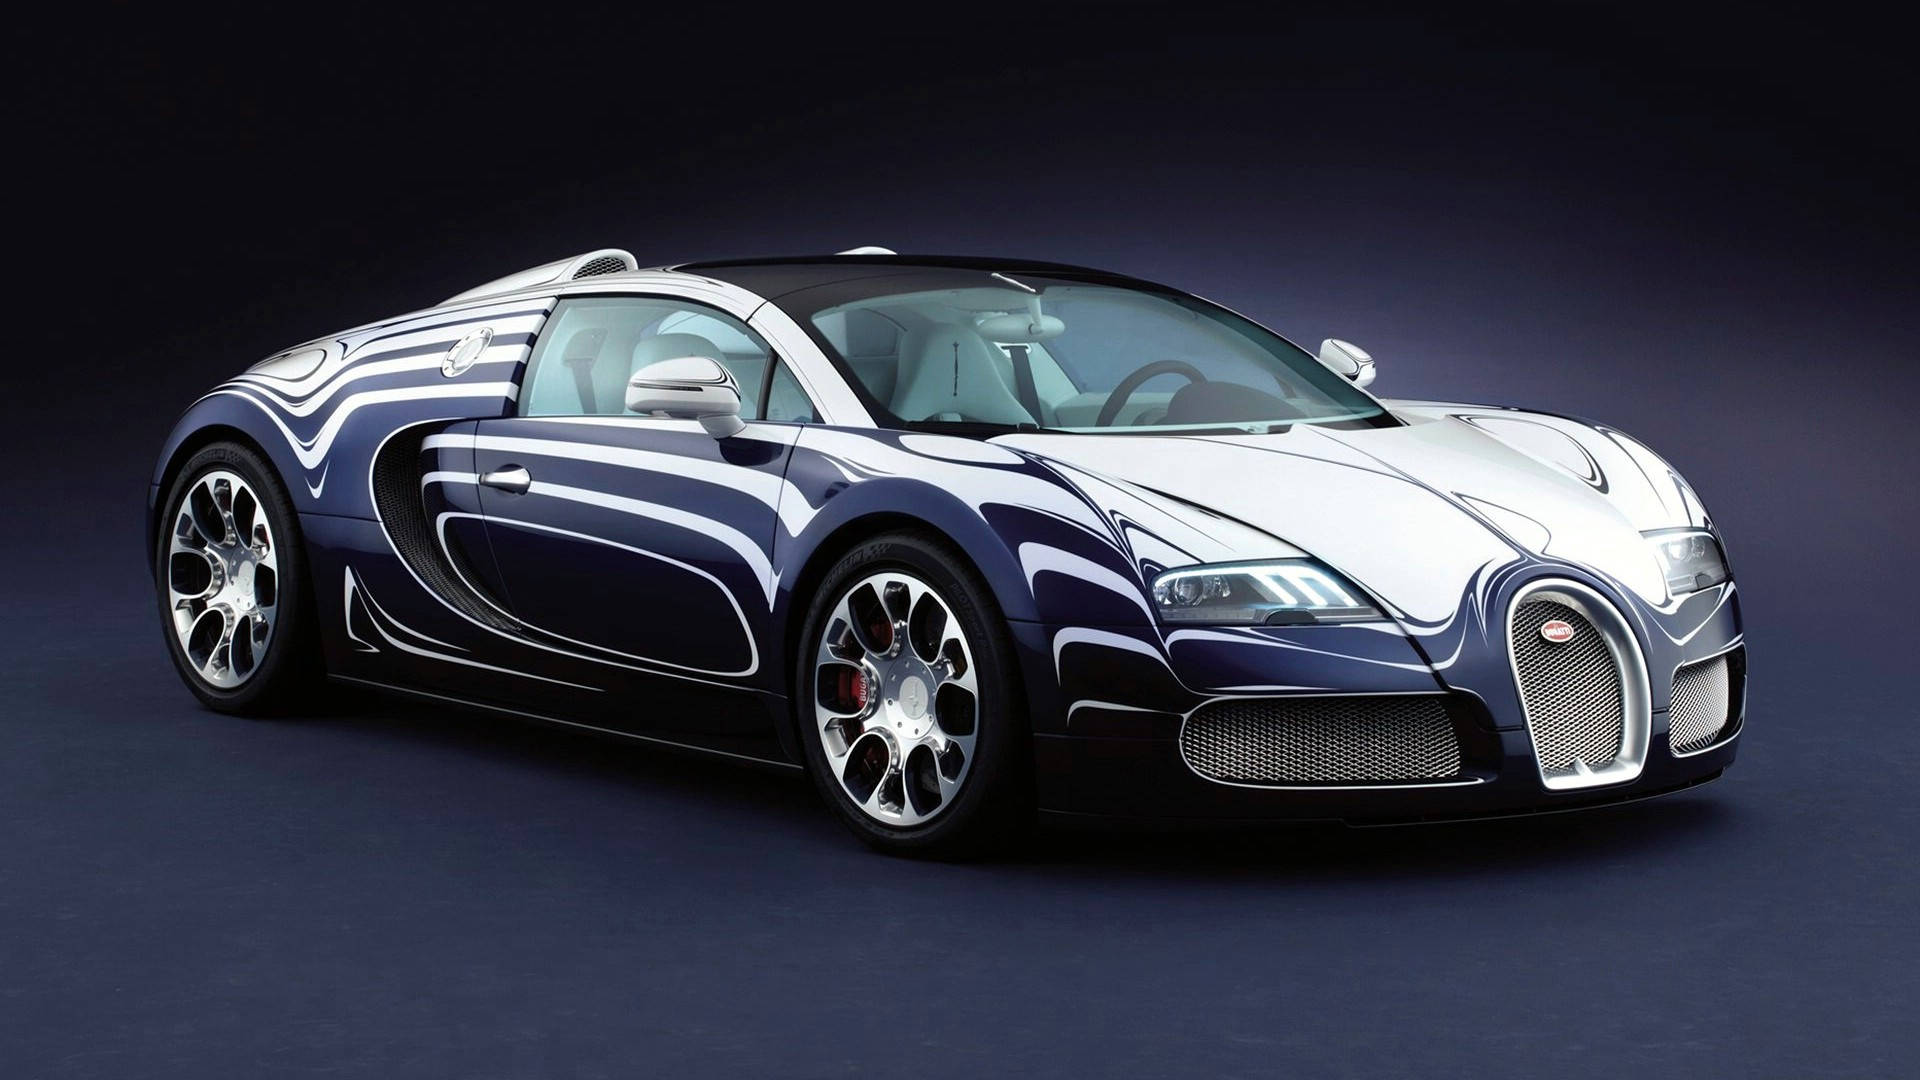 Cool Bugatti Chiron With White Lines Wallpaper